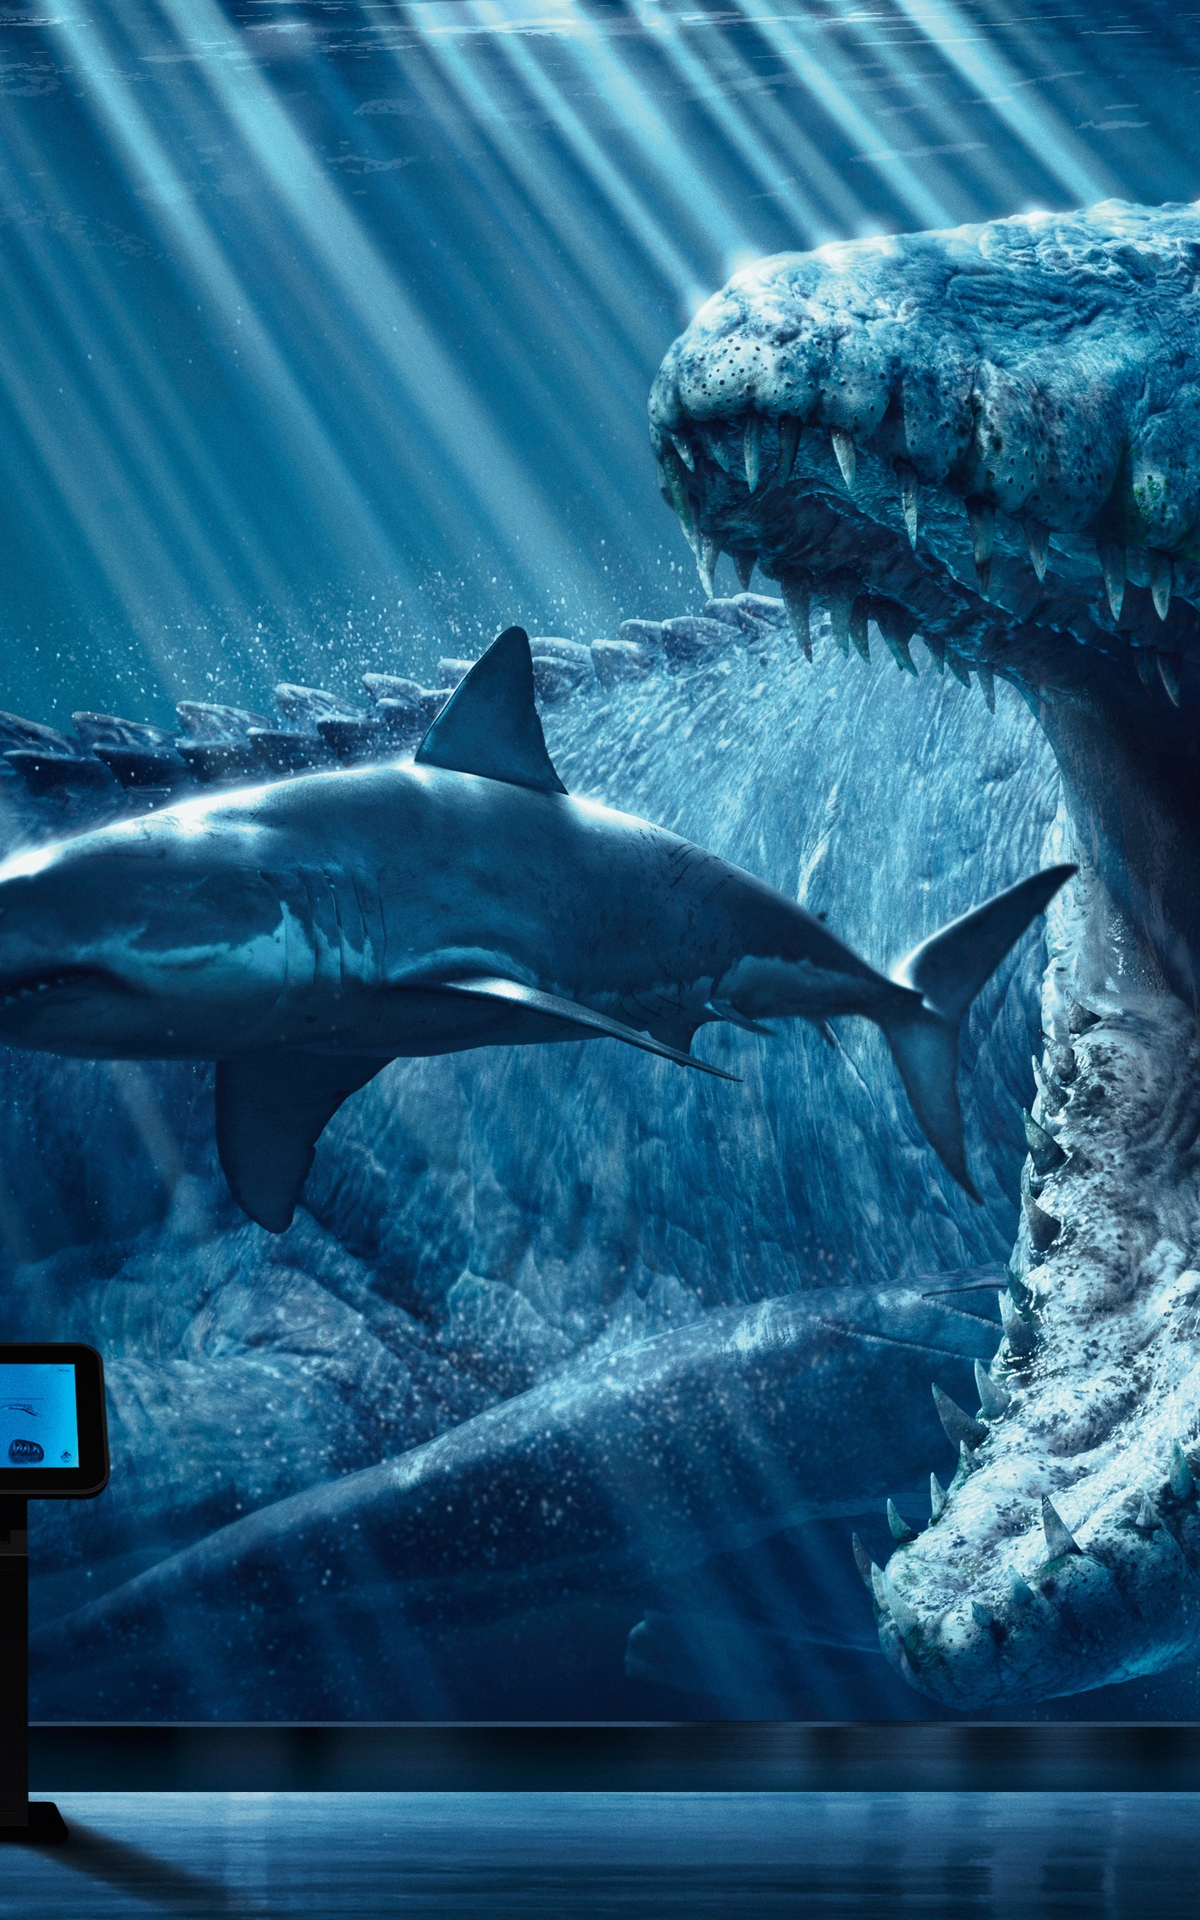 Image: Aquarium, dinosaur, shark, boy, information desk, hunting, predator, Mosasaur, Jurassic World, the movie